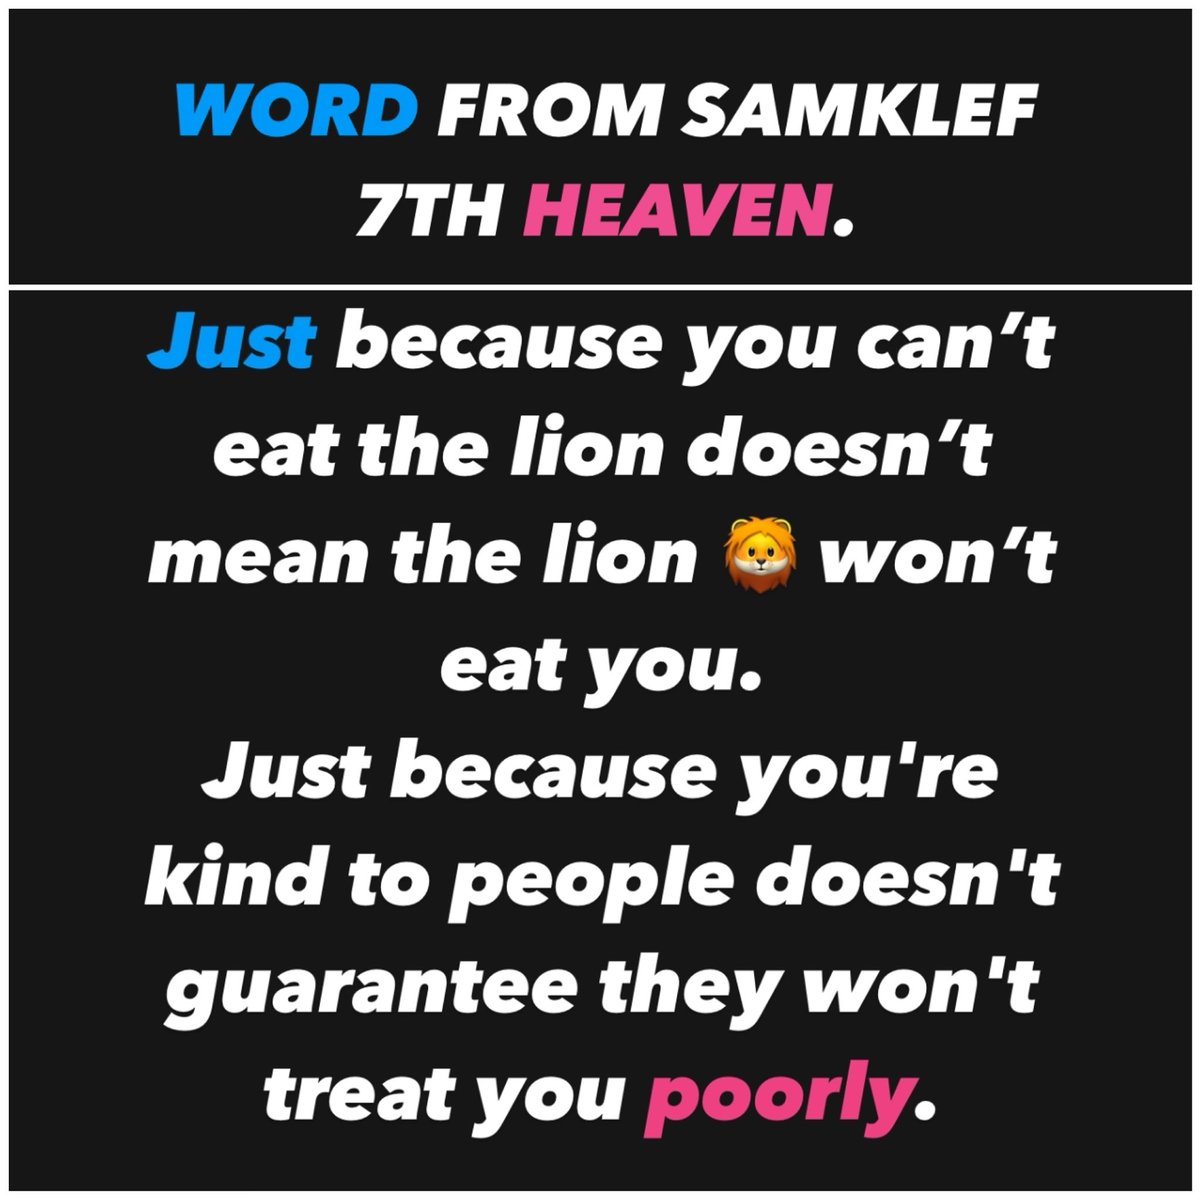 The SAMKLEF 7th heaven mindset.